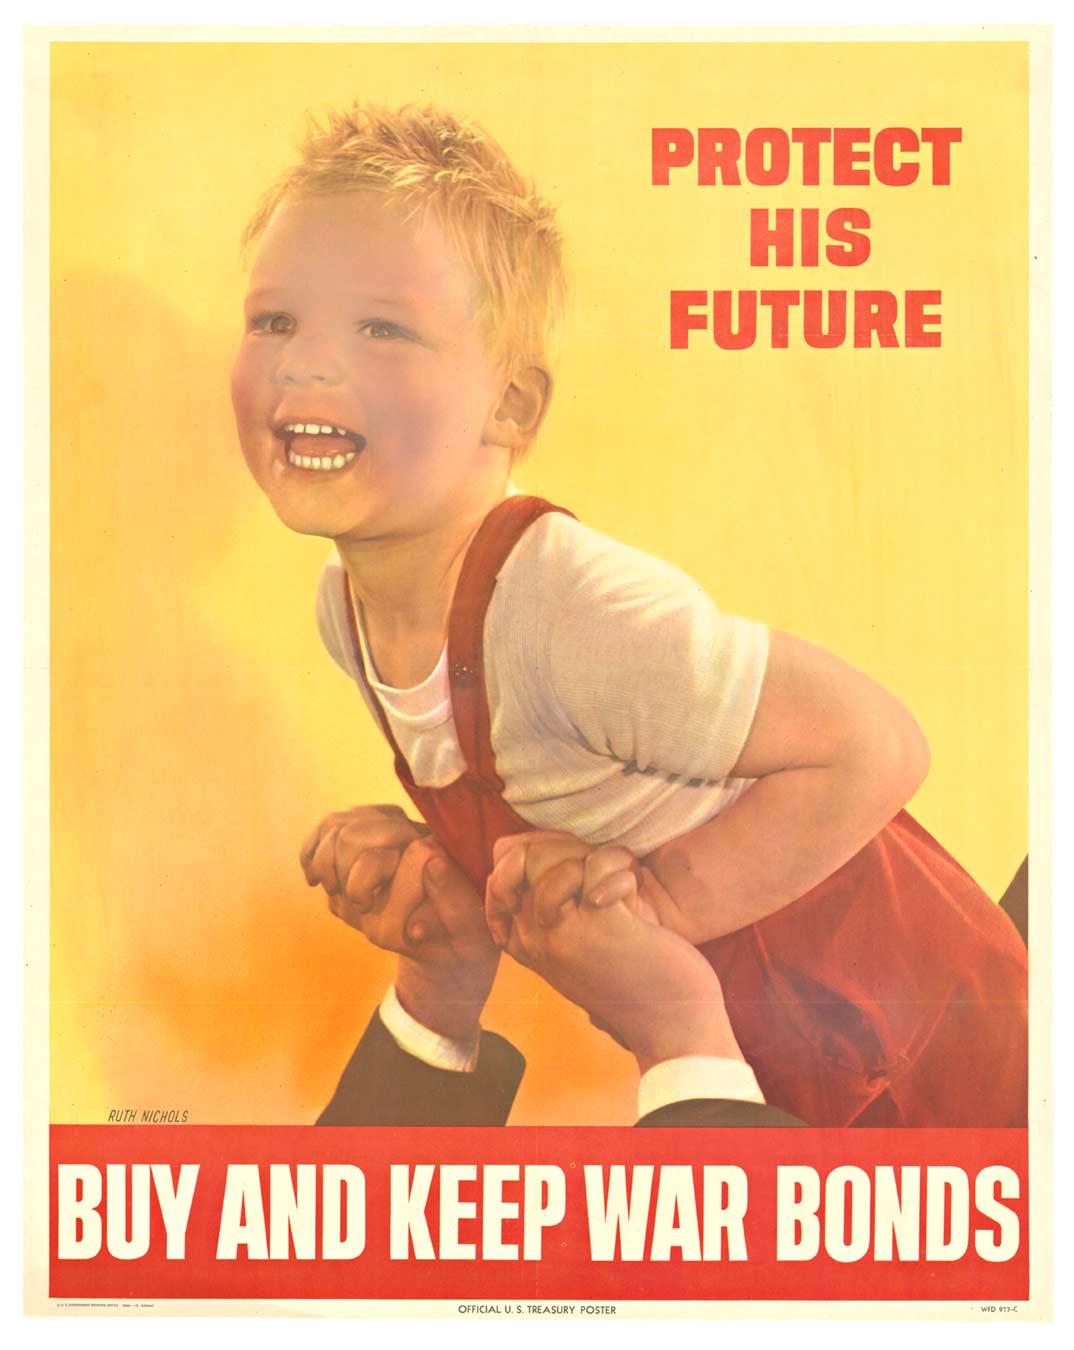 Ruth Nichols Figurative Print - Original "Protect His Future - Buy and Keep War Bonds" vintage poster